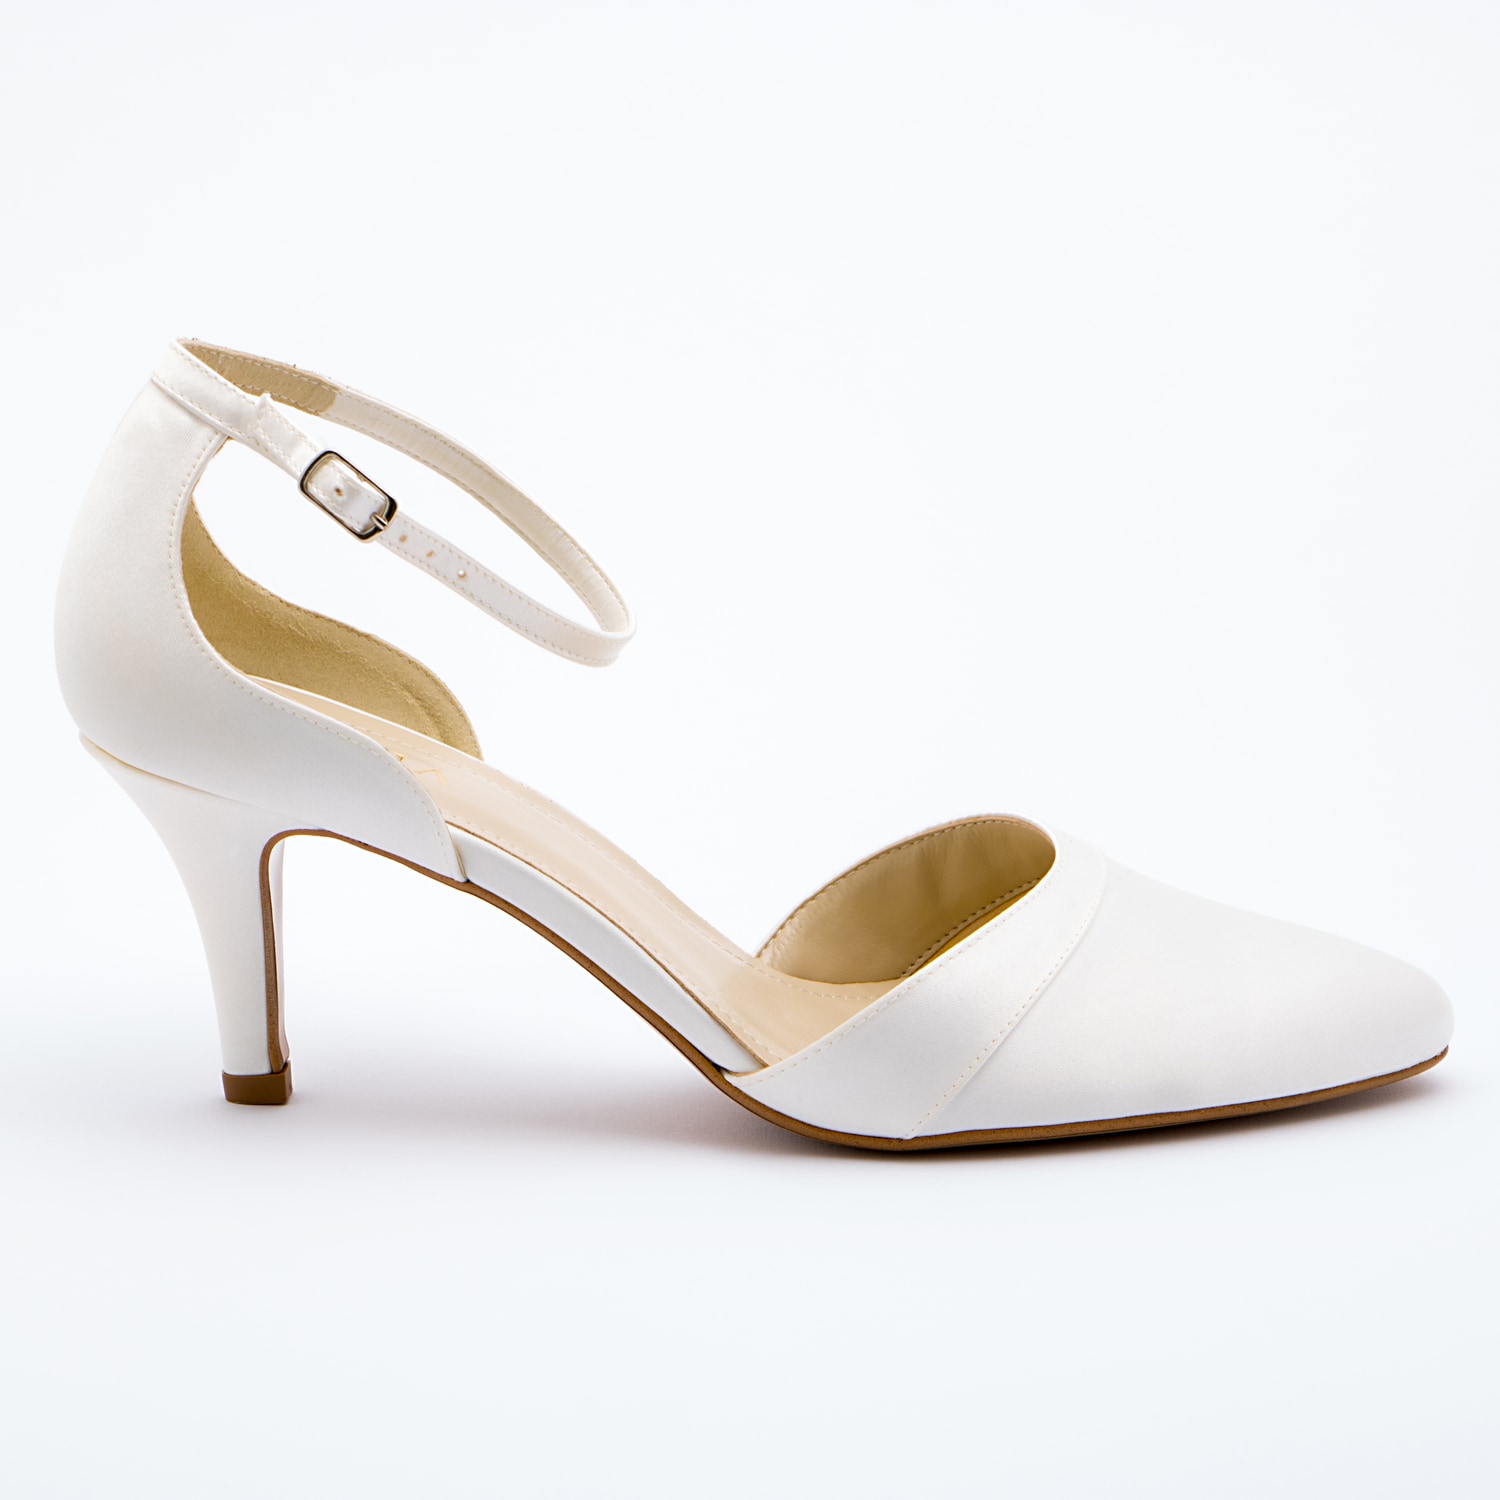 Scarpe Da Sposa 7 Cm.Patrizia Cavalleri Wedding Shoes Bride Shoes 7 Cm Heel